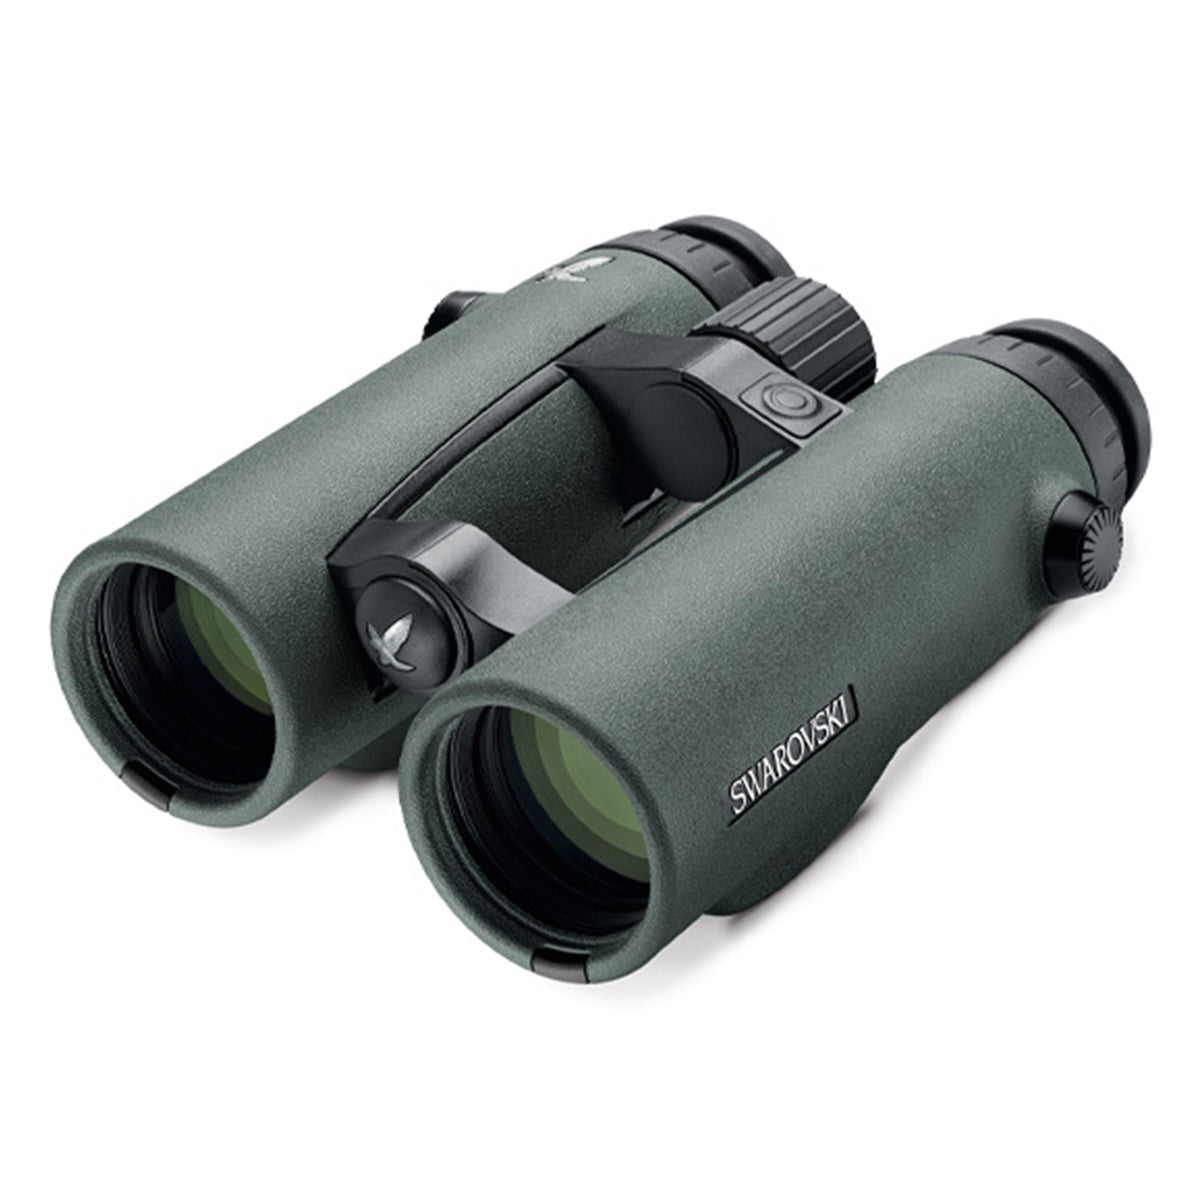 Swarovski EL Range 10x42 Rangefinding Binocular in Swarovski EL Range 10x42 Rangefinding Binocular by Swarovski Optik | Optics - goHUNT Shop by GOHUNT | Swarovski Optik - GOHUNT Shop